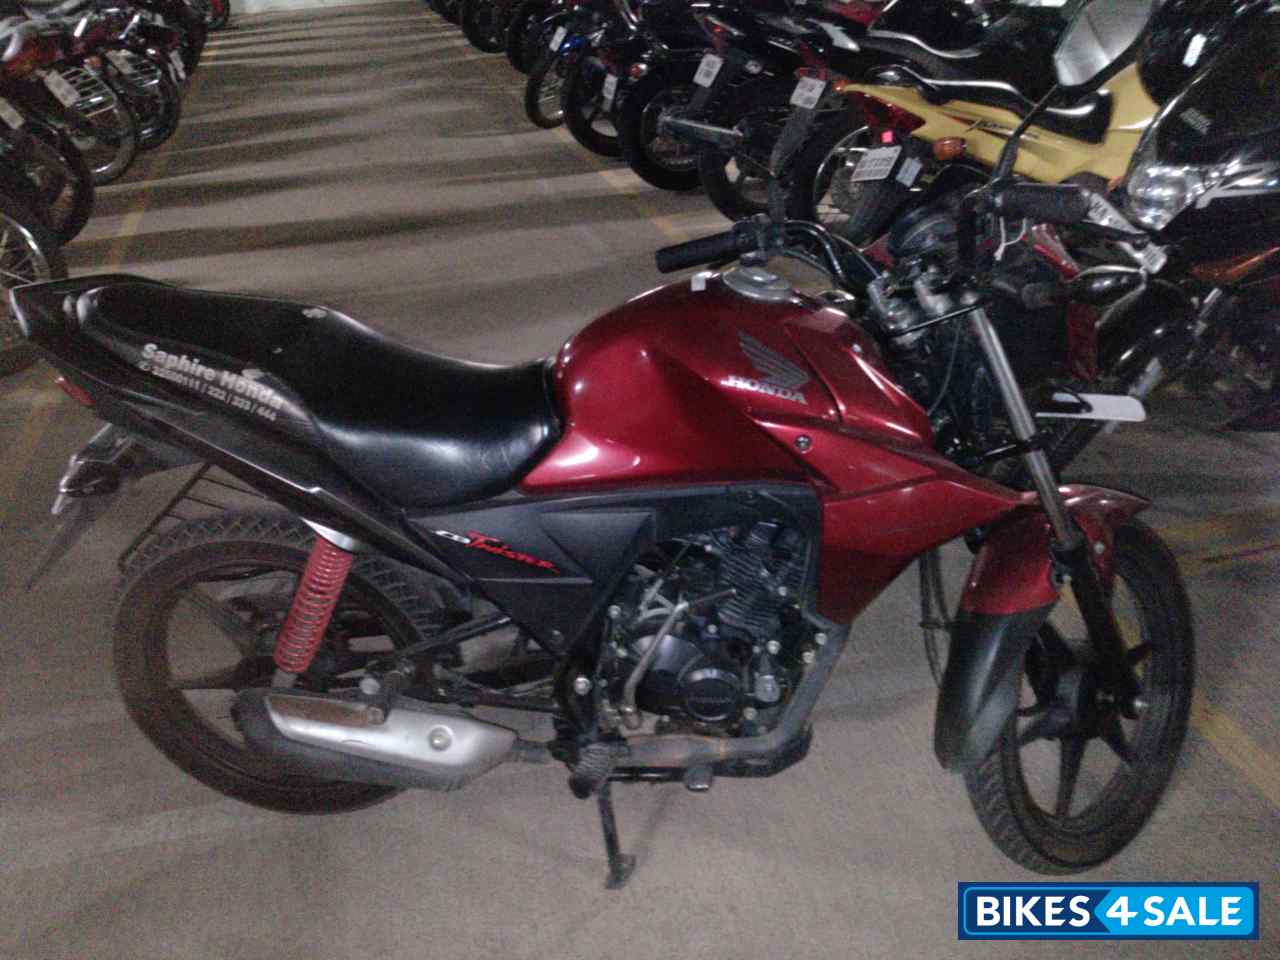 Honda cb twister bike price in bangalore #3